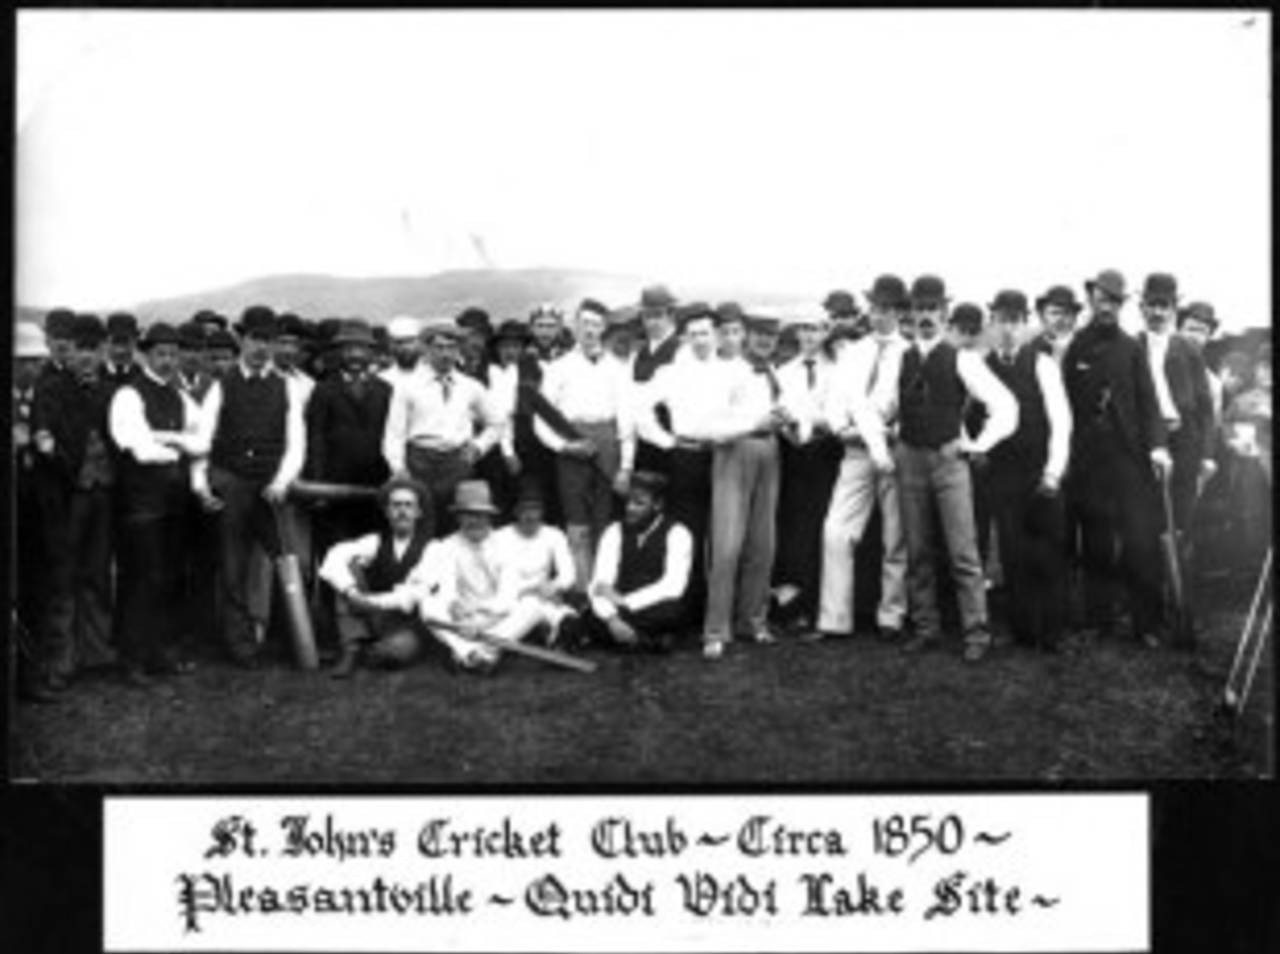 The team from St John's, Newfoundland circa 1850